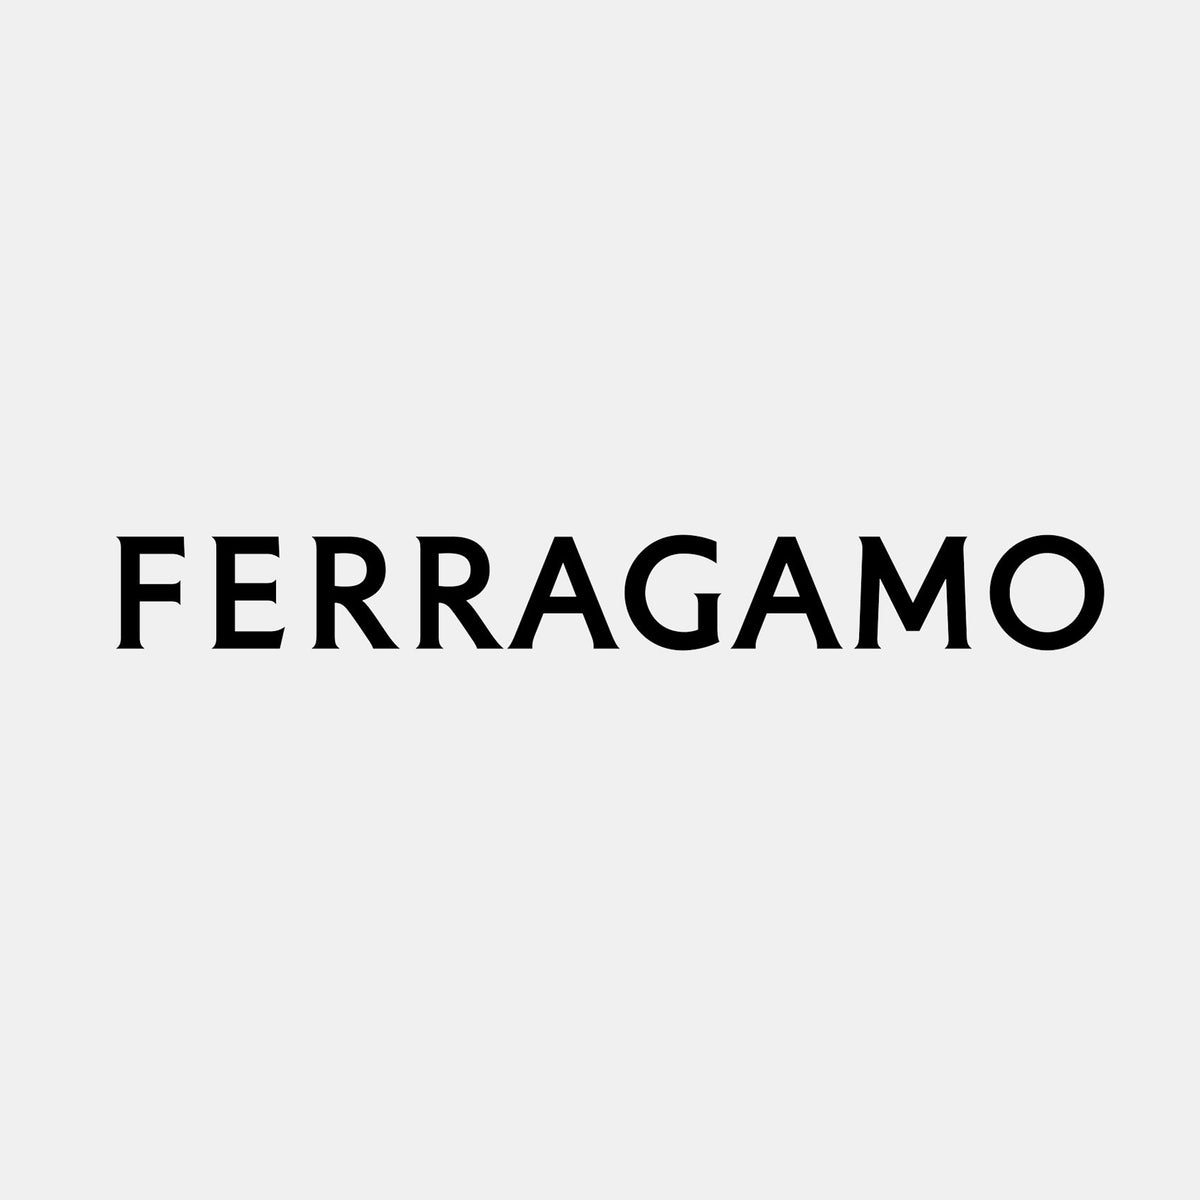 Peter Saville updates Ferragamo brand identity with custom typeface ...